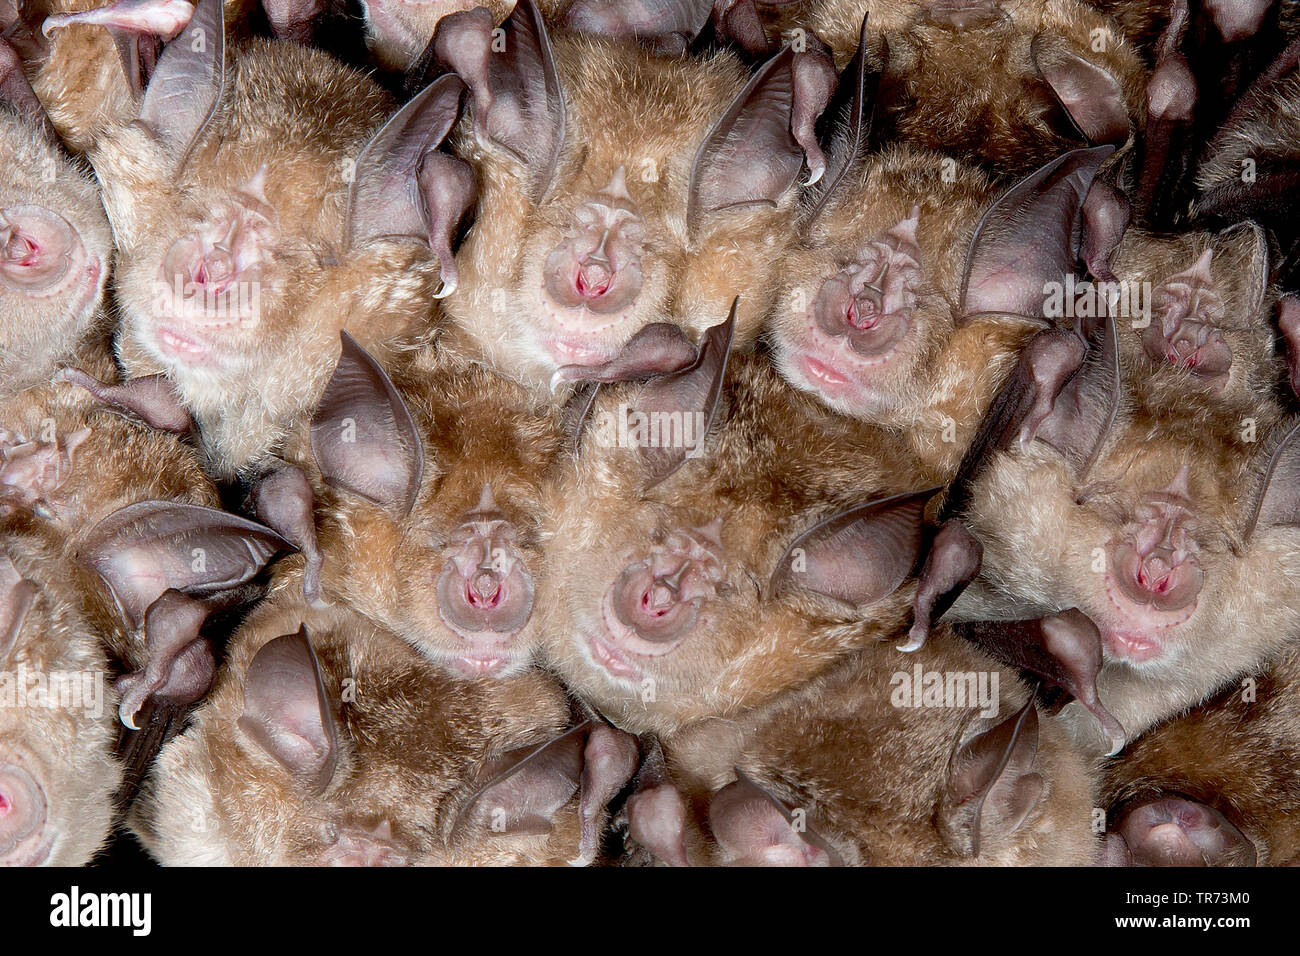 Greater horseshoe bat (Rhinolophus ferrumequinum), sleeping colony at a cave ceiling, France Stock Photo